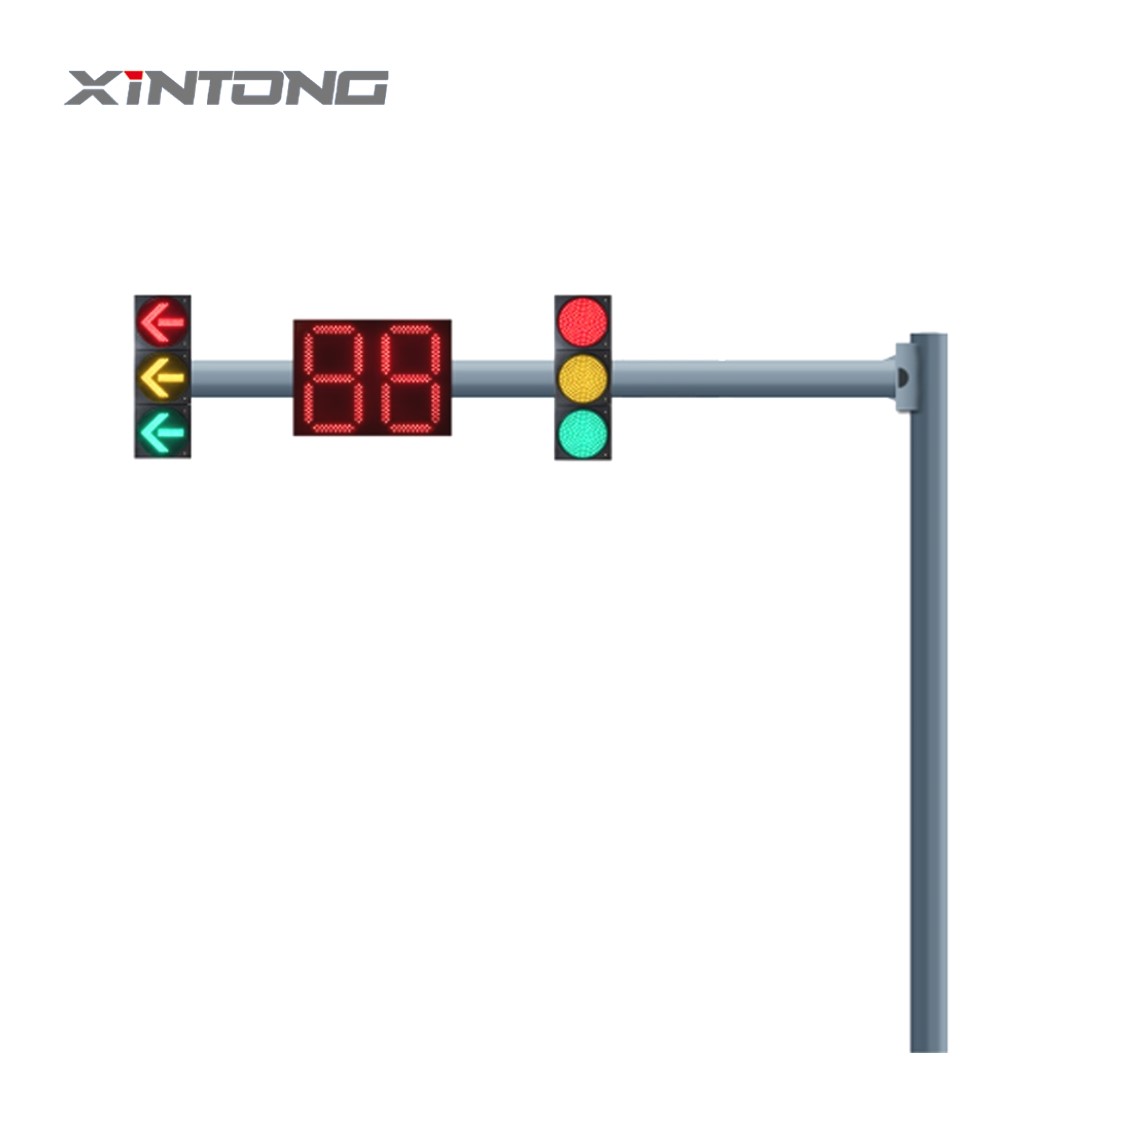 Lighting Solutions for Traffic Light Poles